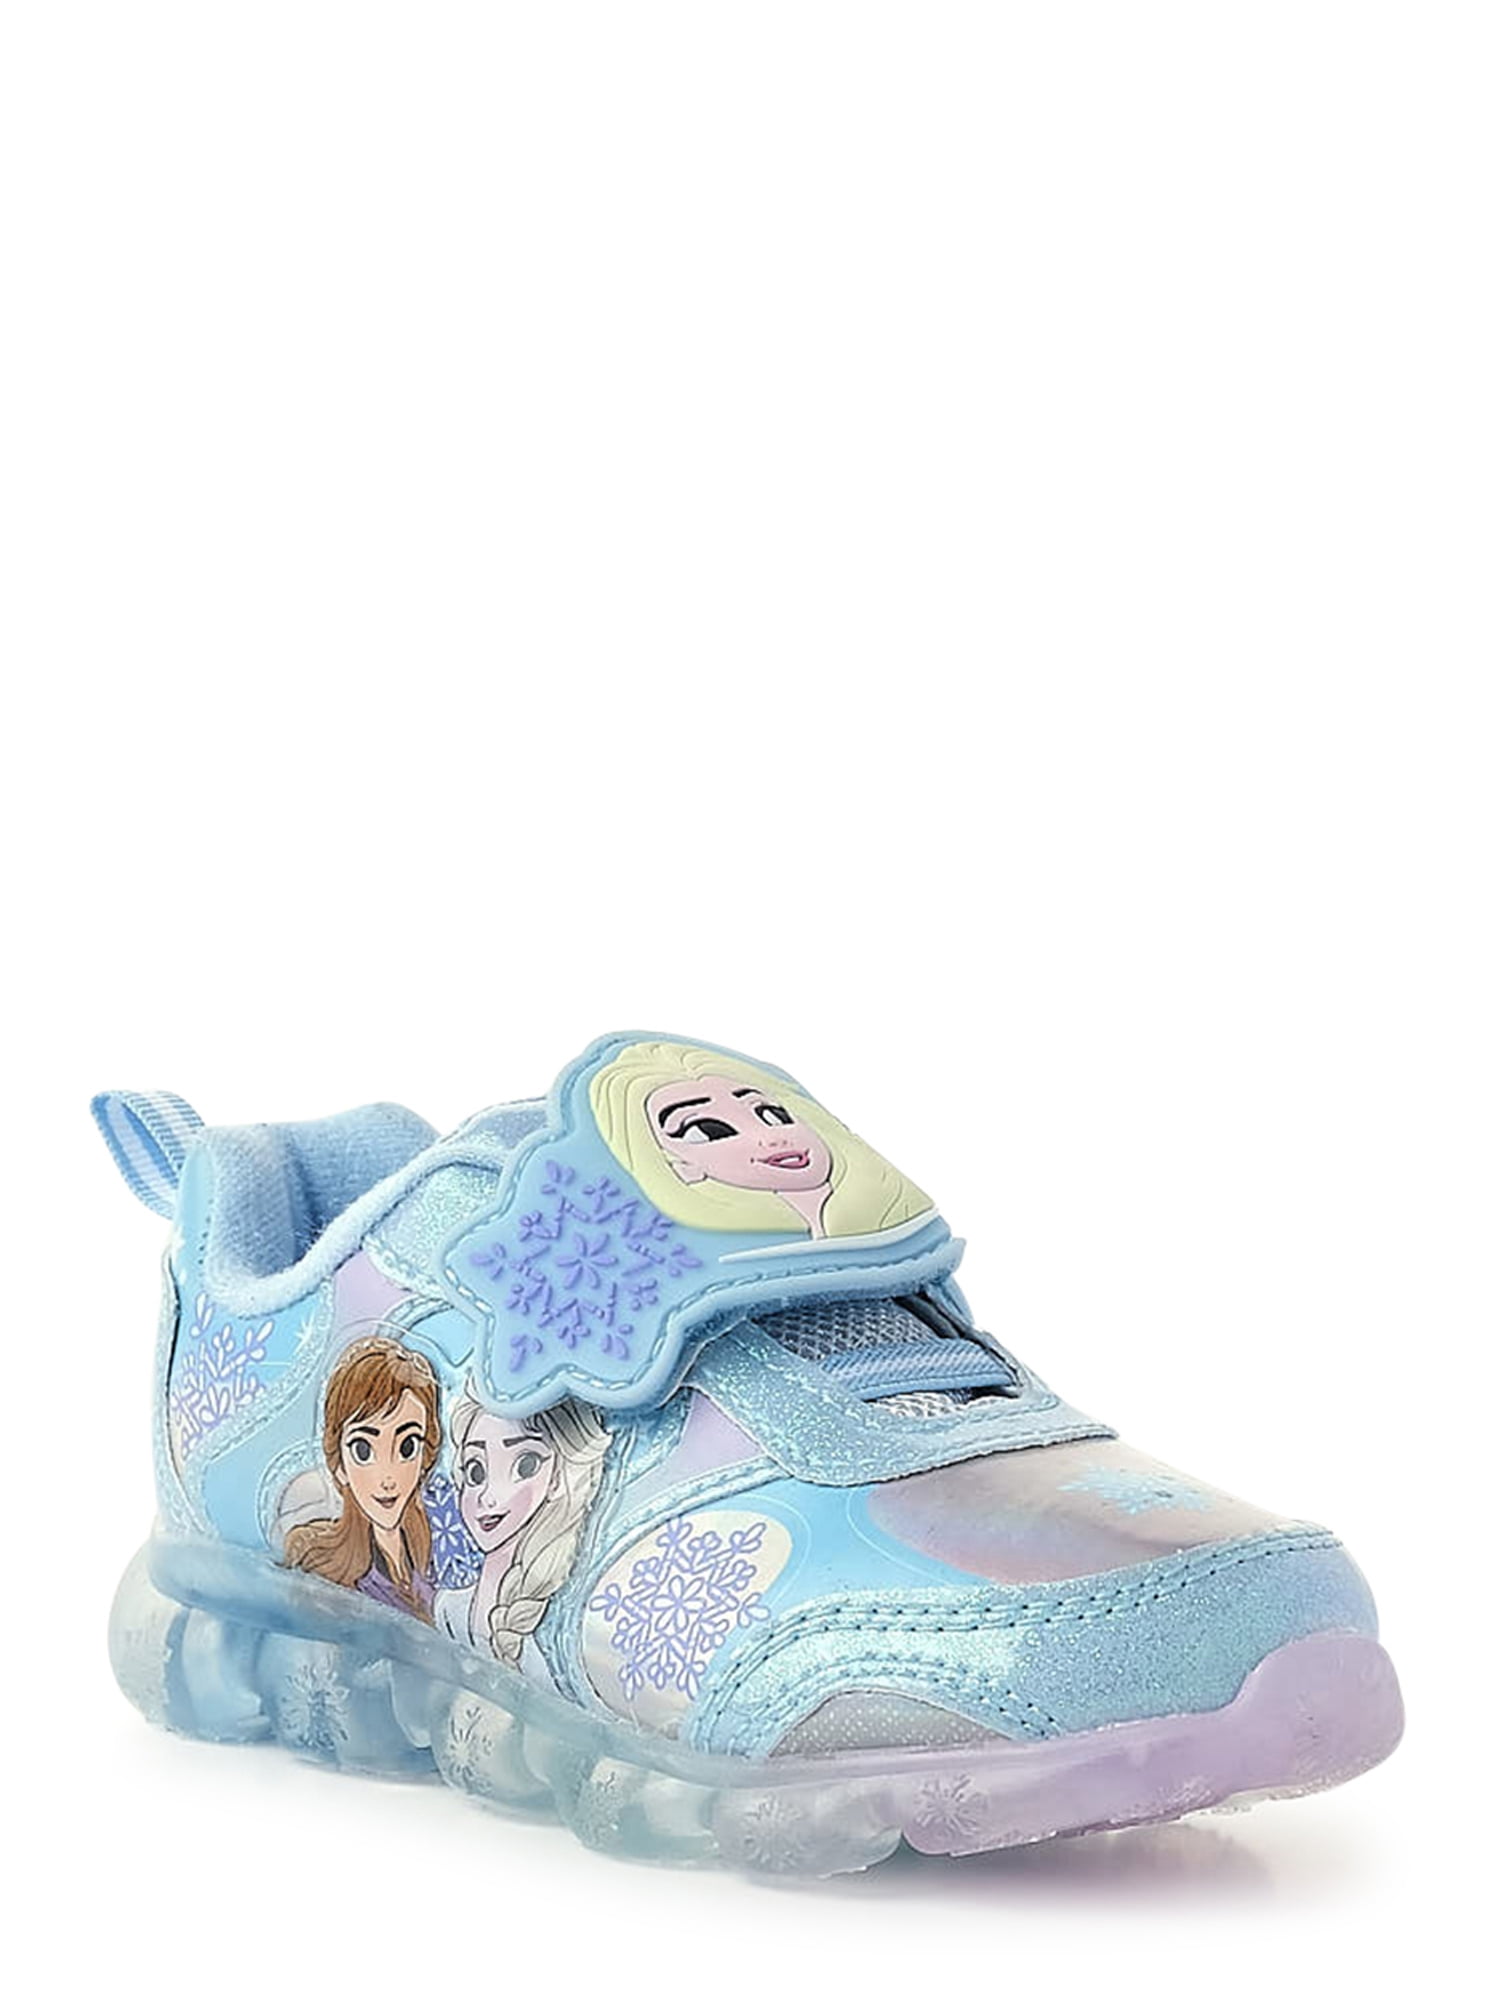 Onset Fearless lotus Disney Frozen Toddler Girl Athletic Light Up Sneaker, Sizes 7-12 -  Walmart.com